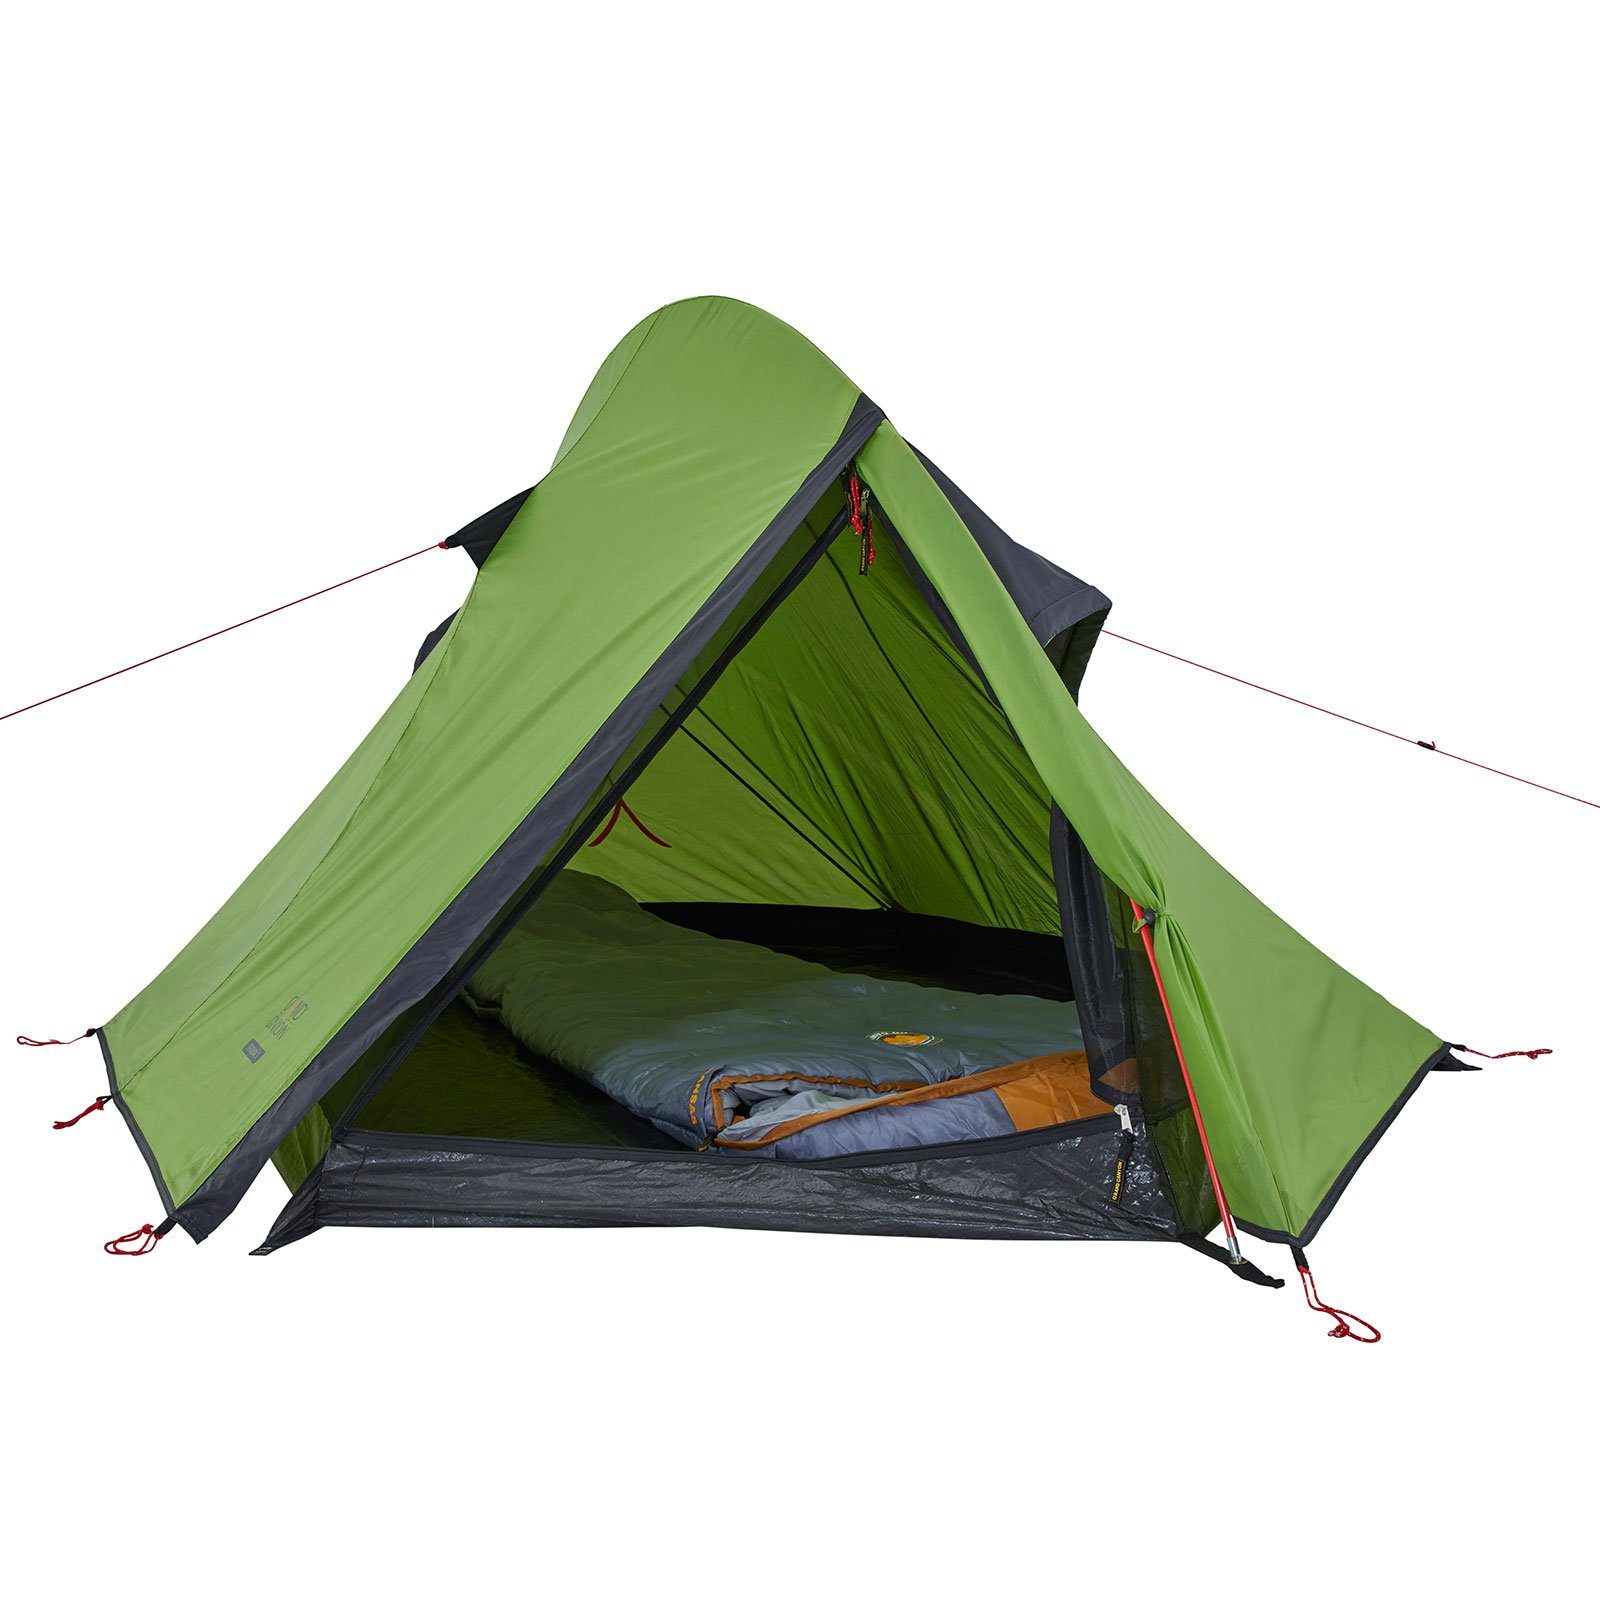 GRAND CANYON Firstzelt Trekking, Personen Leicht 1-2 Zelt Camping Cardova Einbogen Einmann